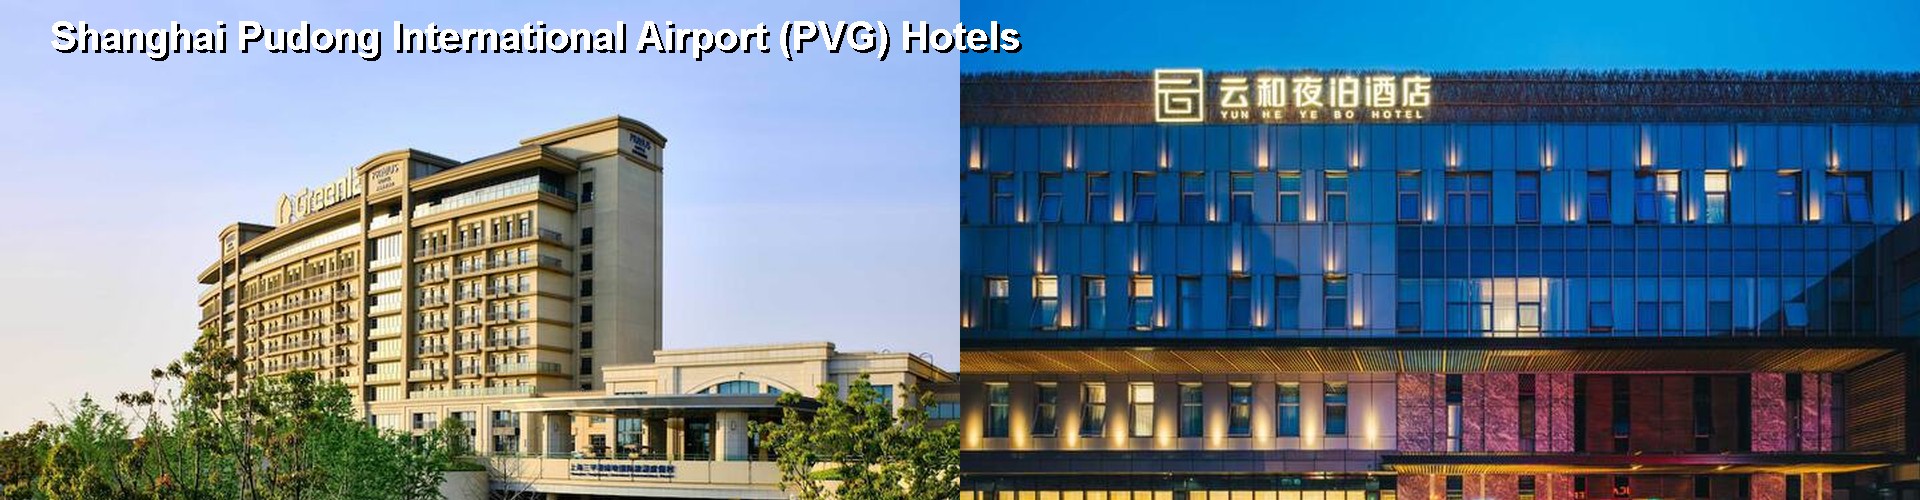 5 Best Hotels near Shanghai Pudong International Airport (PVG)